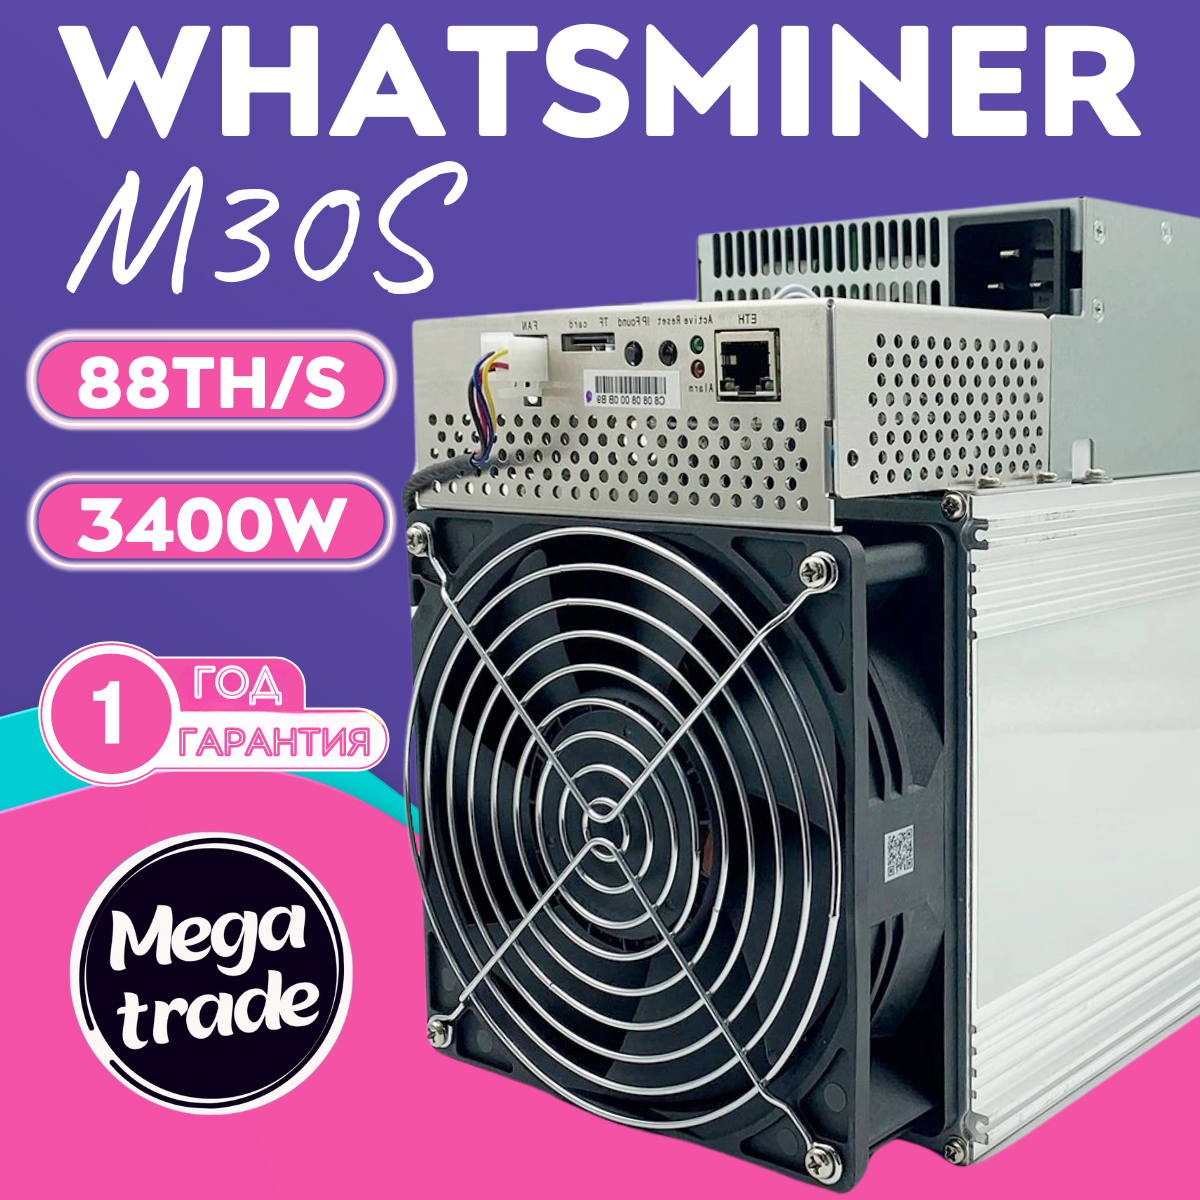 ASIC майнер Whatsminer M30S+ 88TH/s